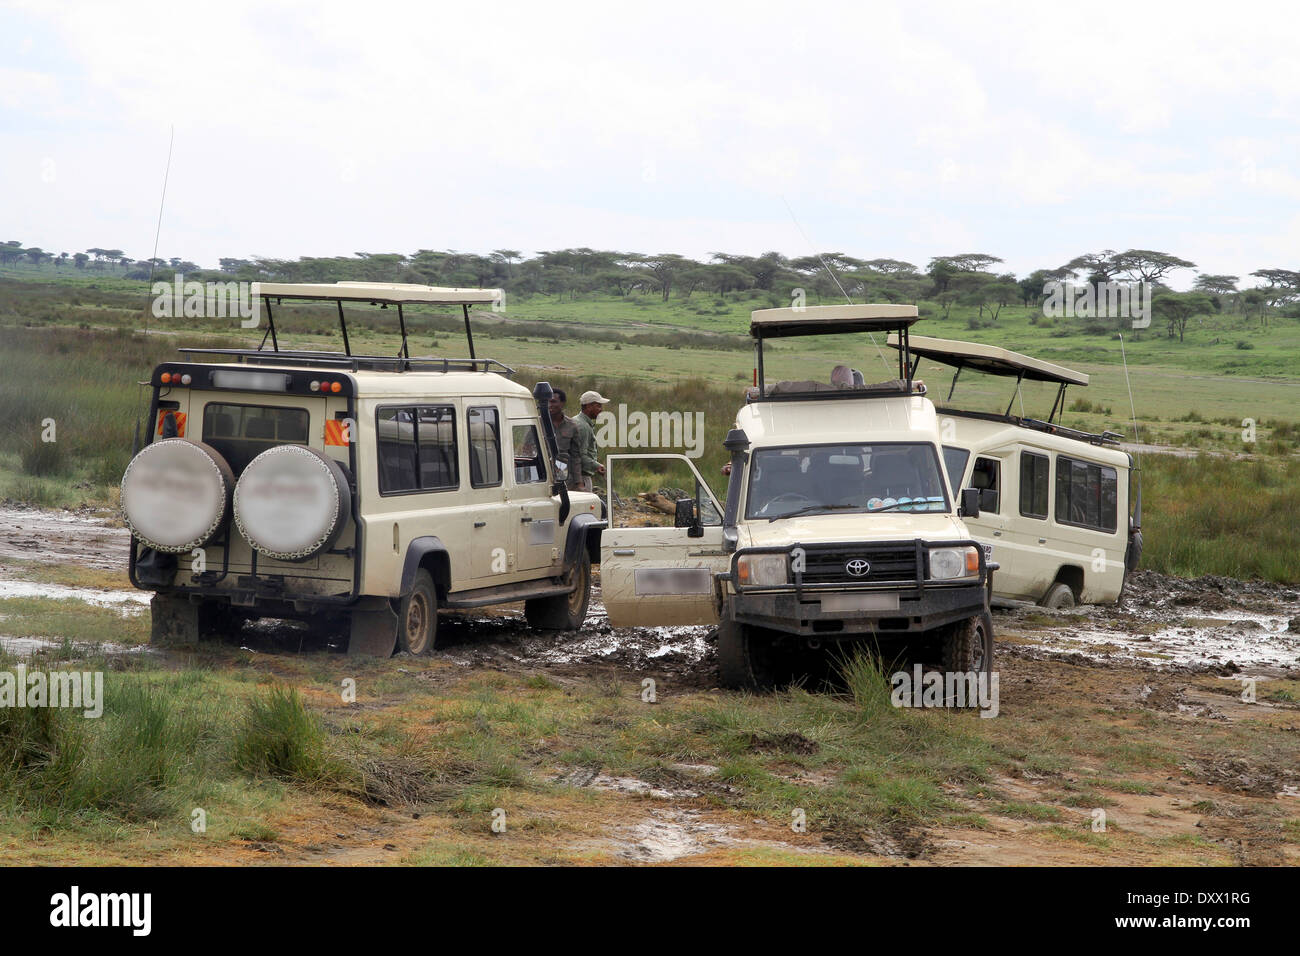 Safari vehicles stuck in the mud, towing action, mud road, Serengeti, Tanzania Stock Photo